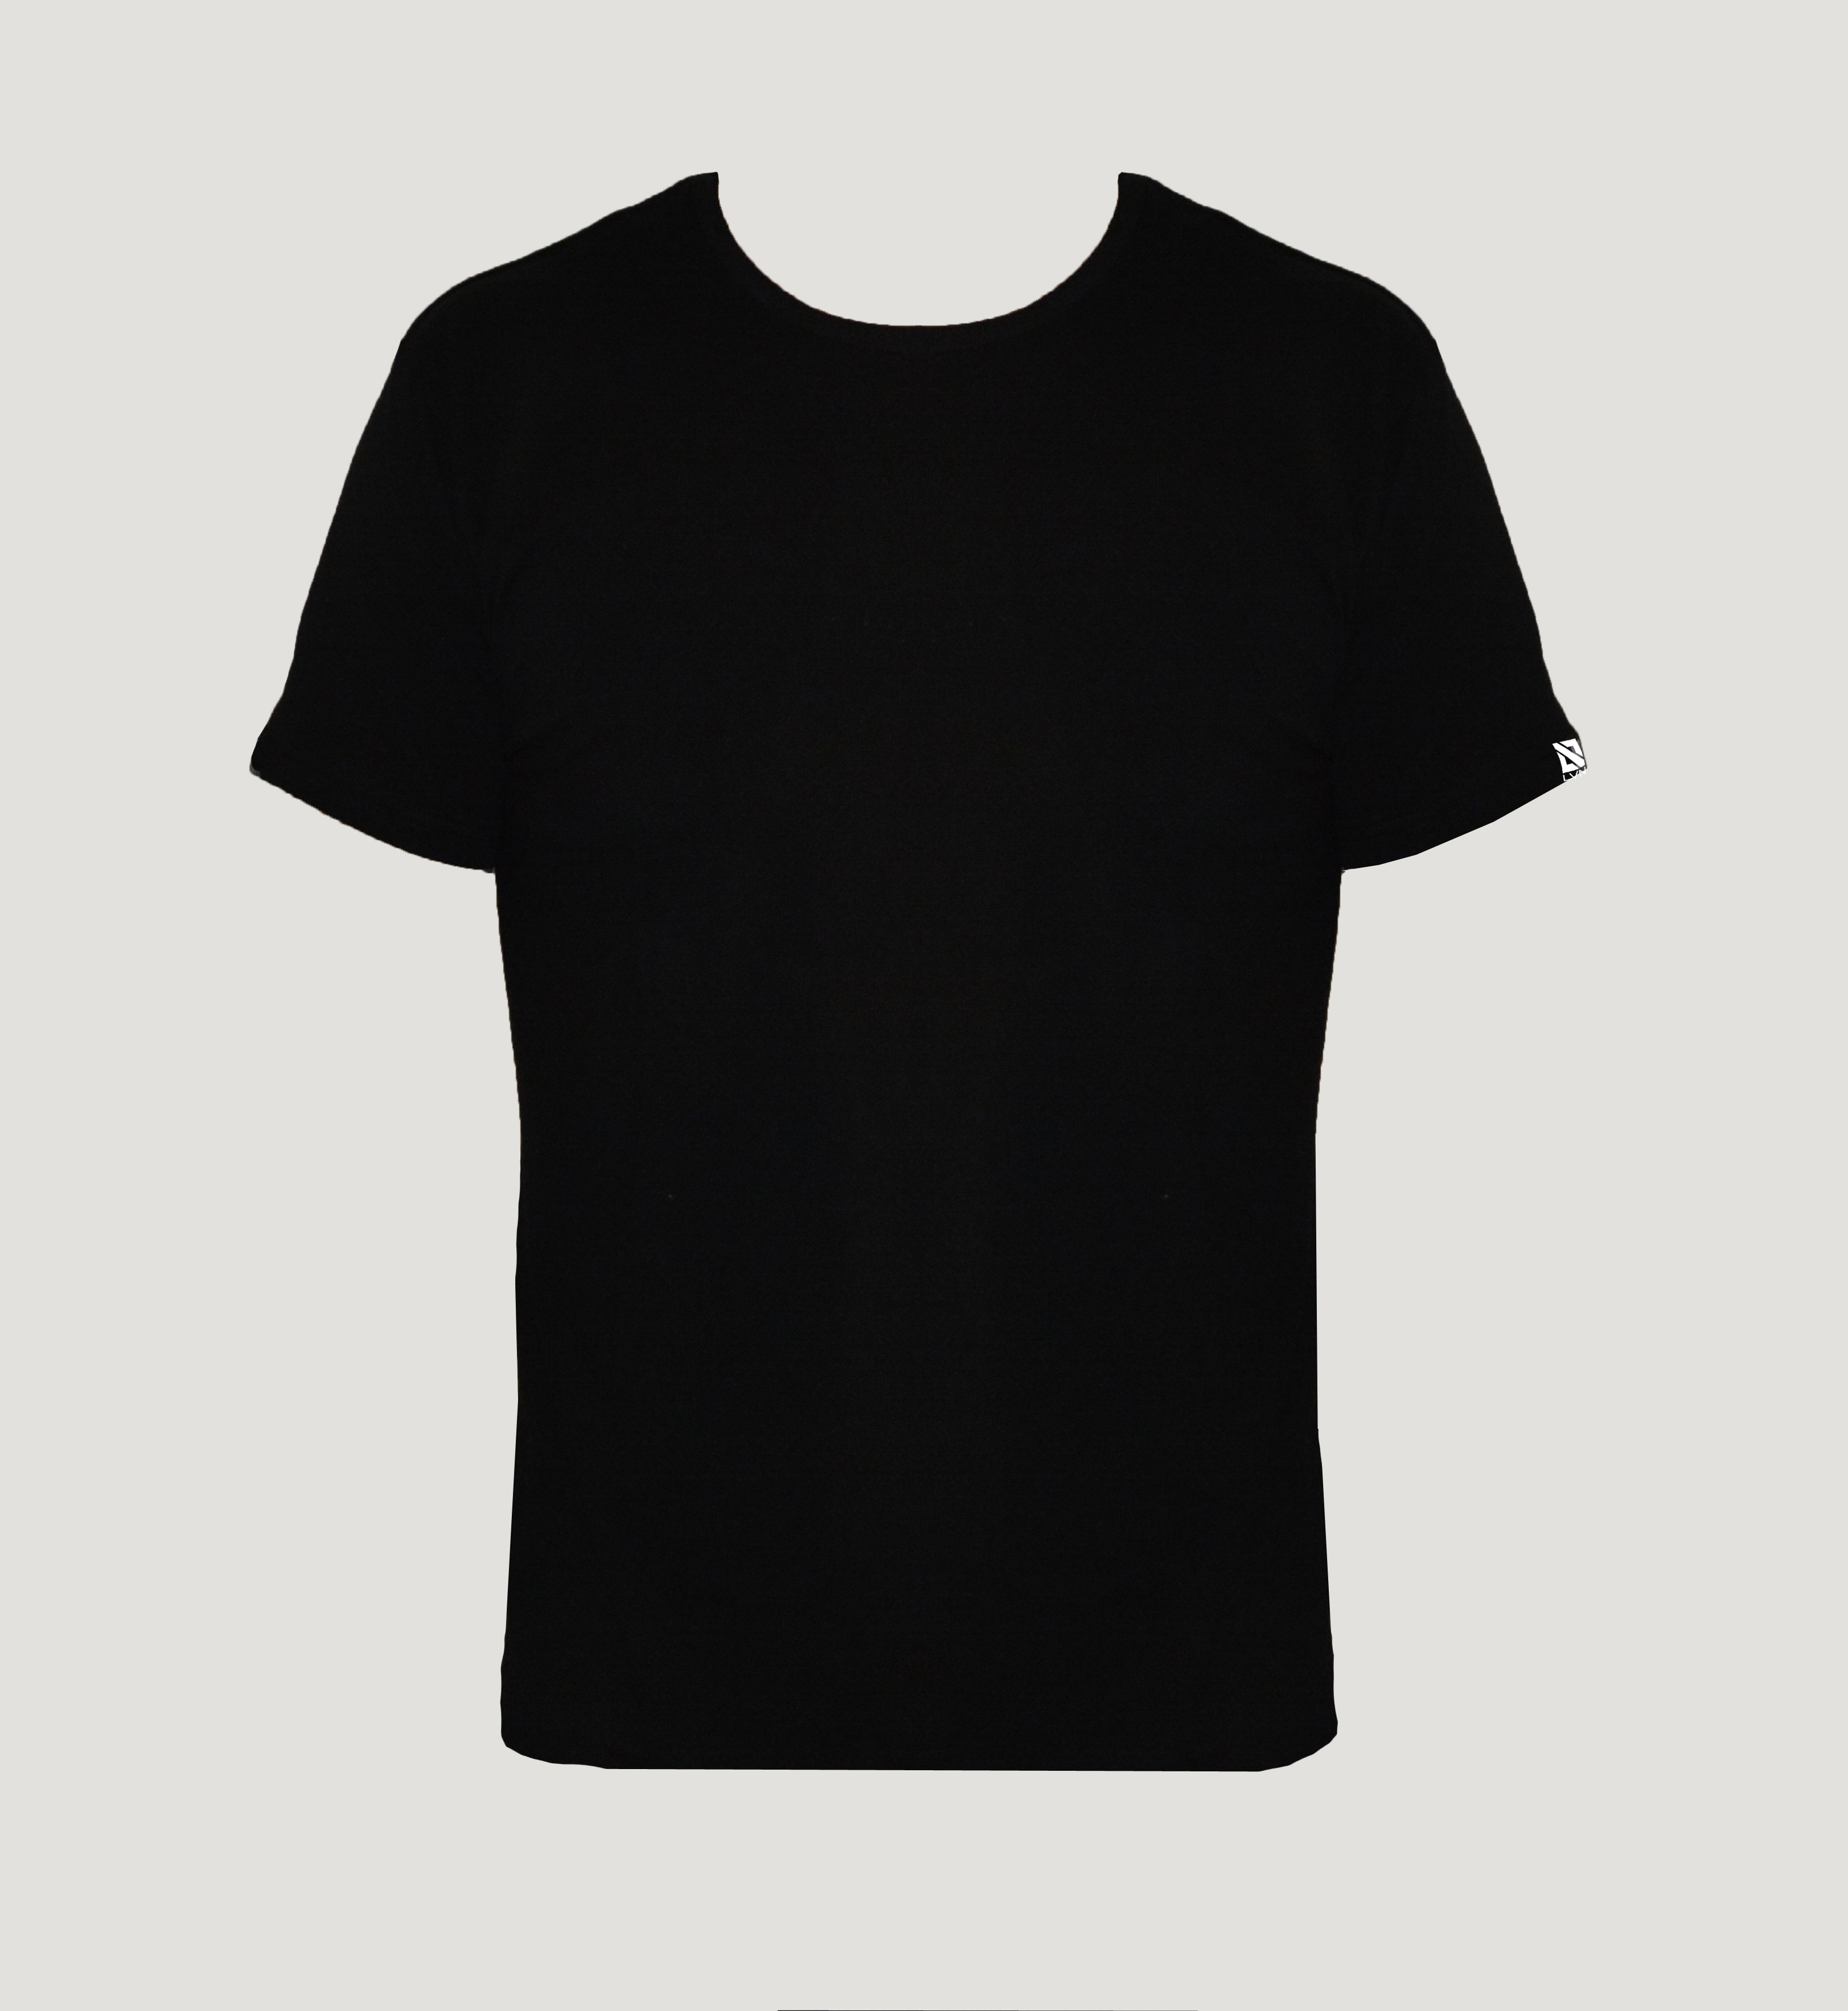 men.black_.tshirt.front_.jpg - ClipArt Best - ClipArt Best